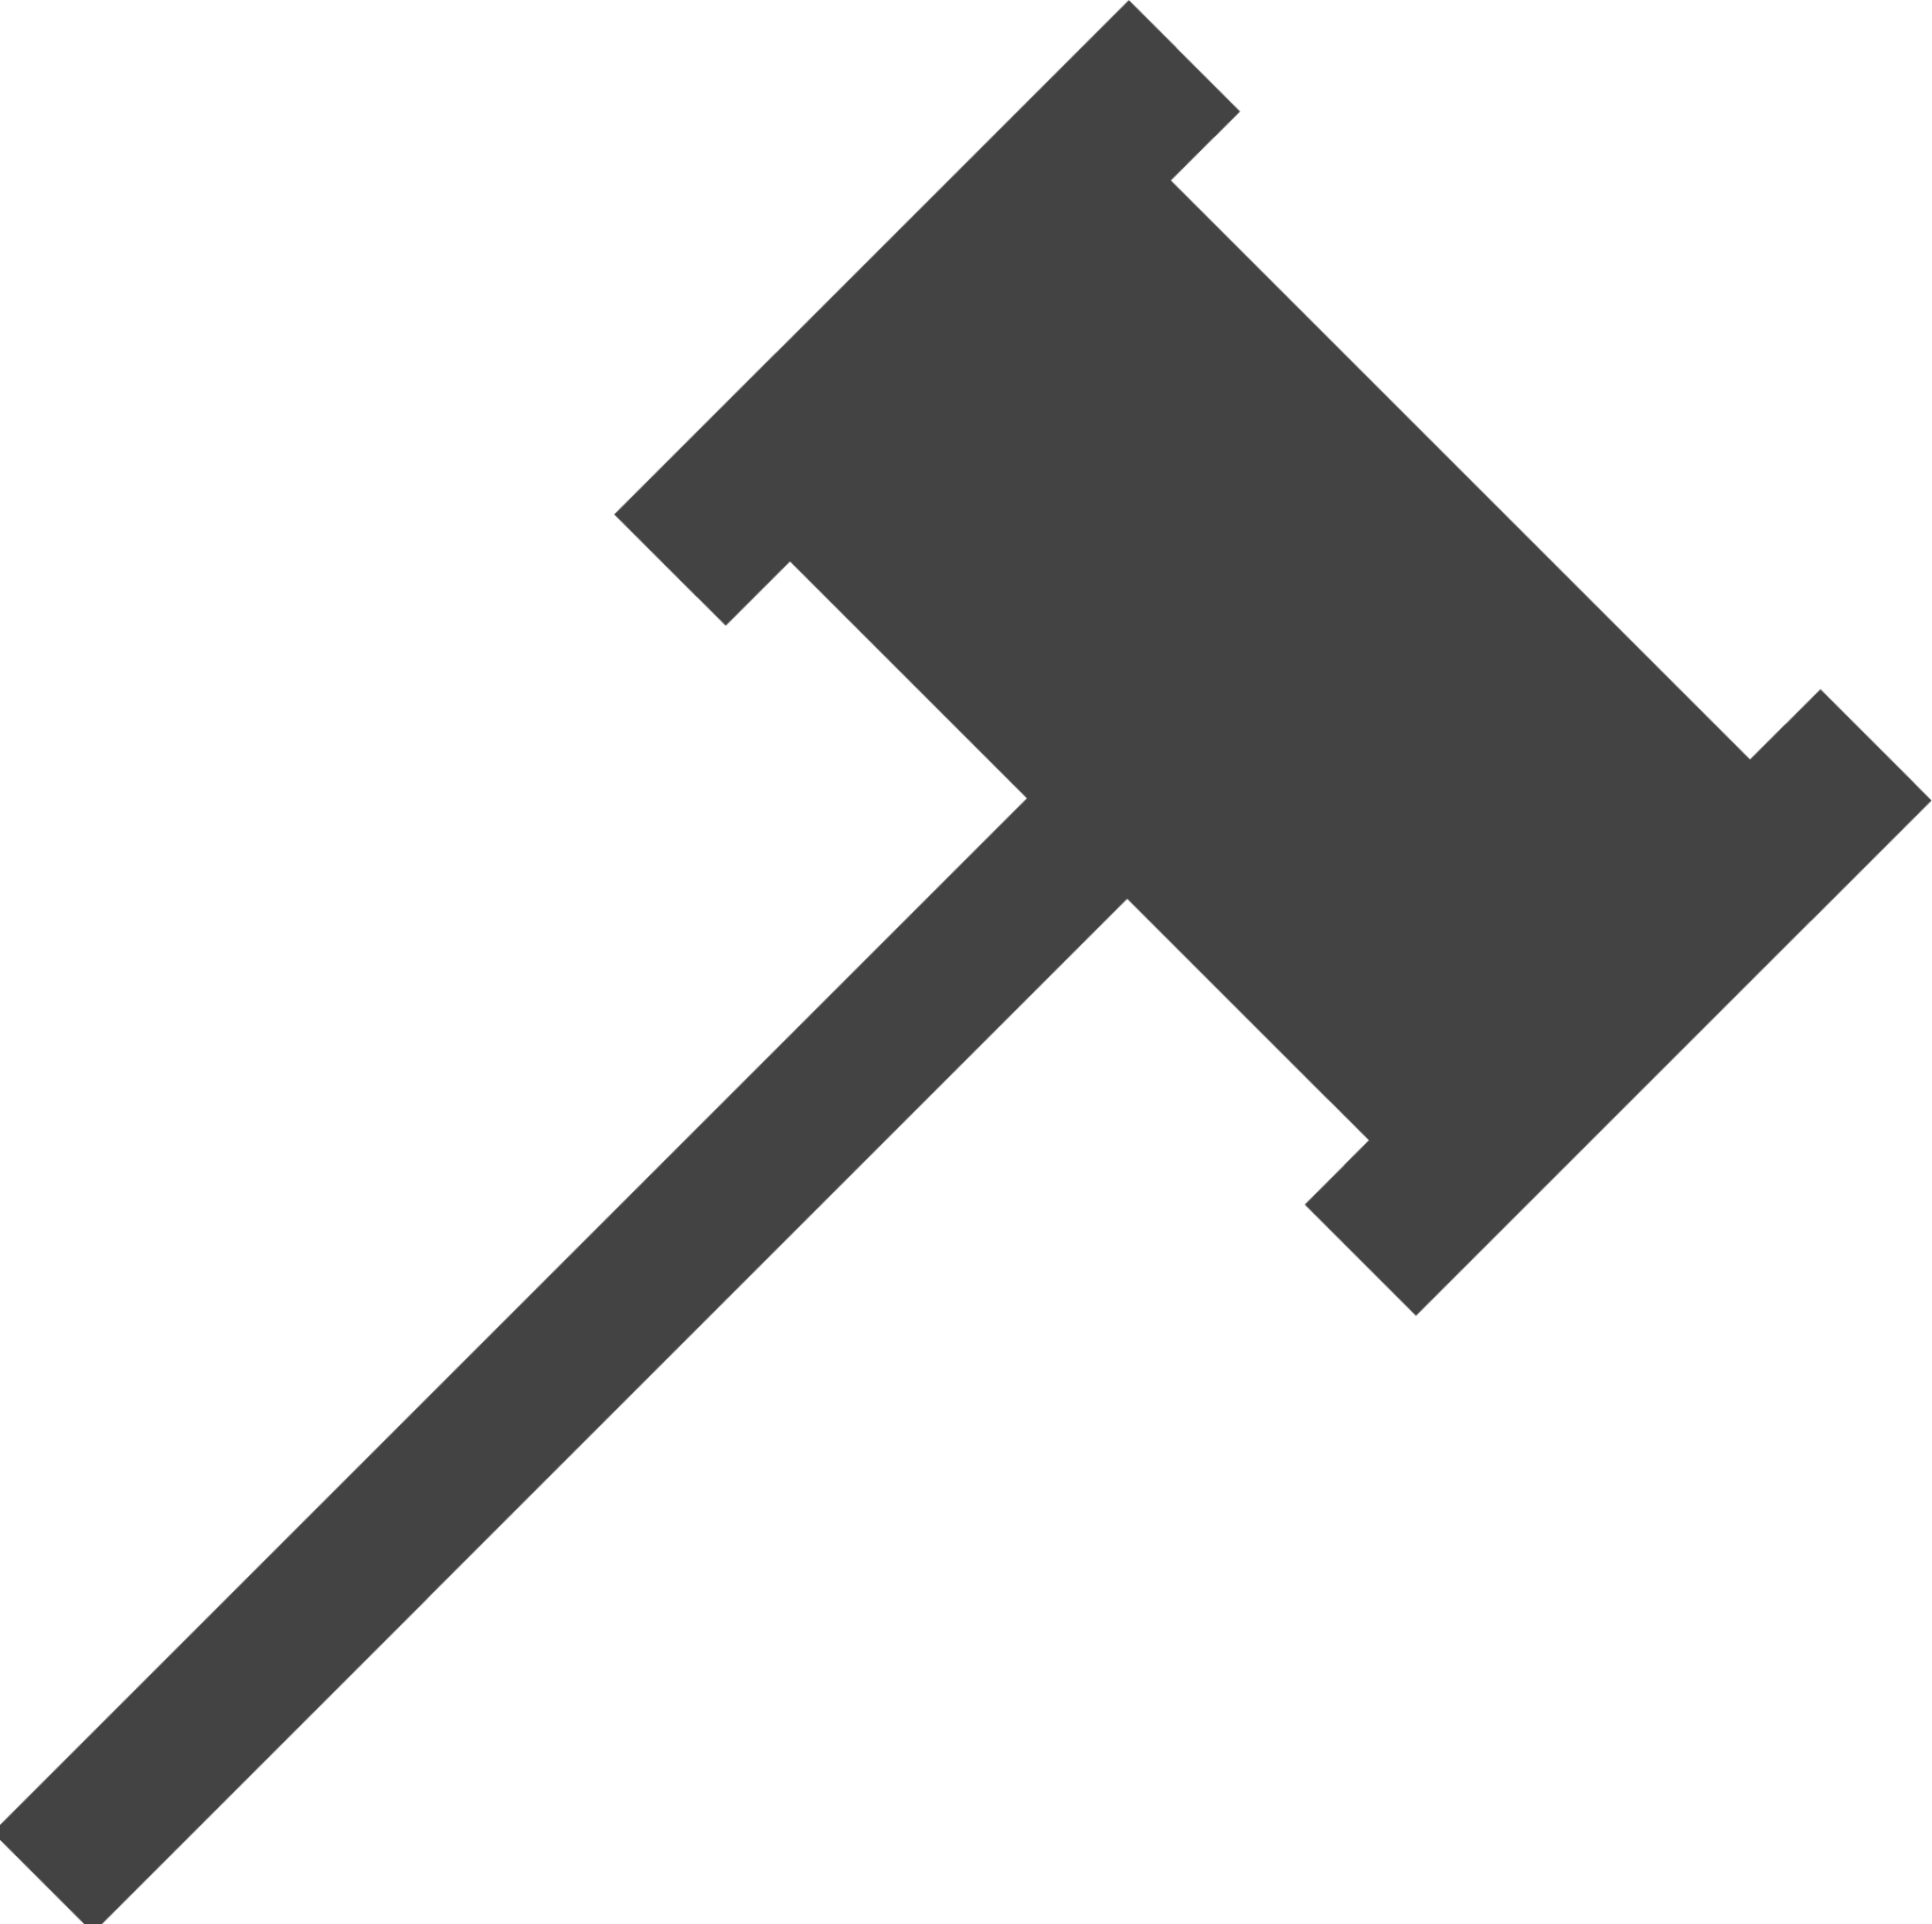 law hammer logo png